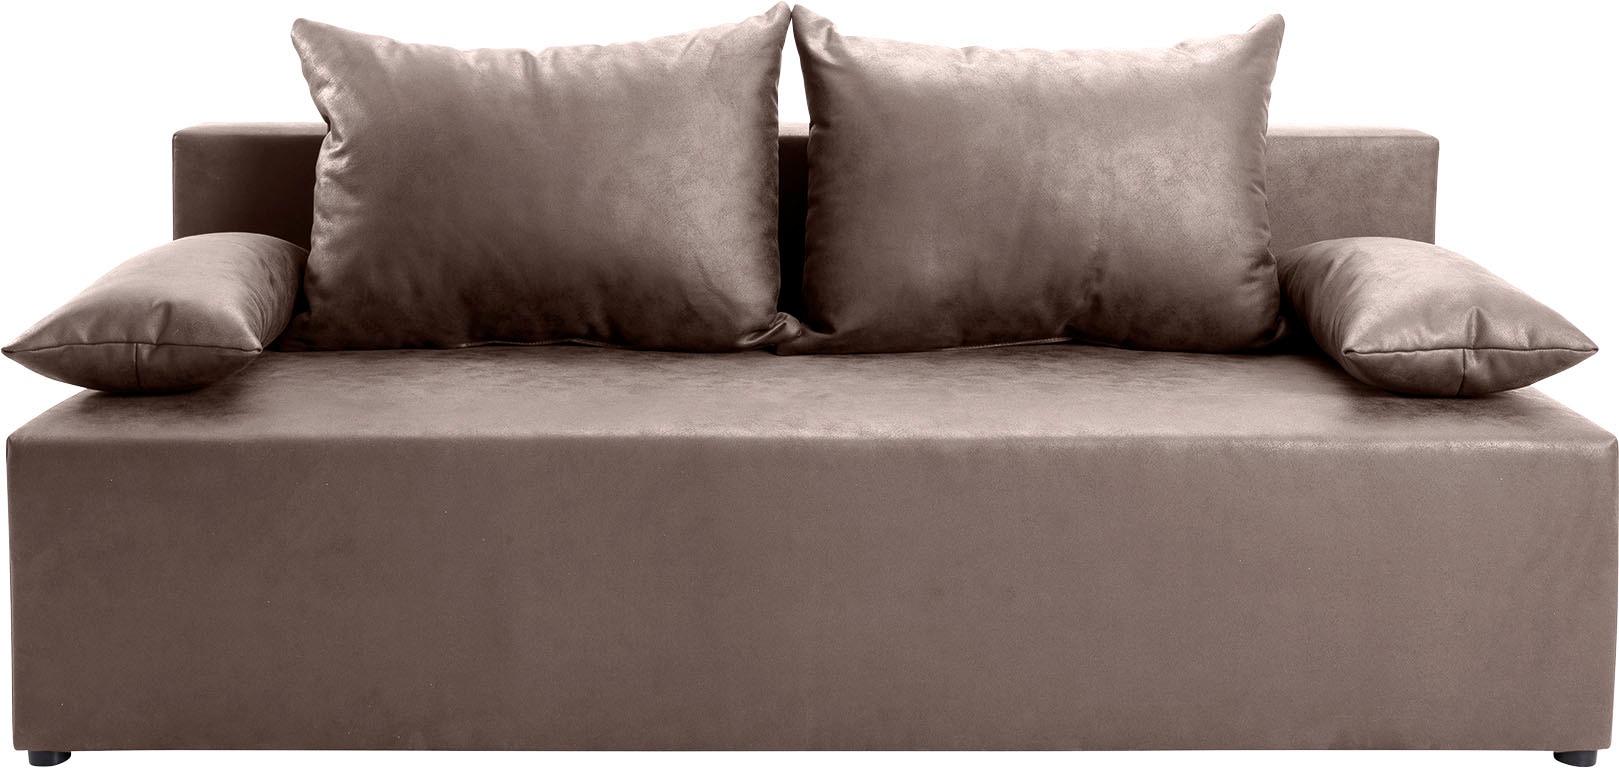 exxpo - sofa fashion online Liftbettfunktion und »Exxpo wahlweise kaufen mit Federkern Bettfunktion,Bettkasten, Schlafsofa Tabou«